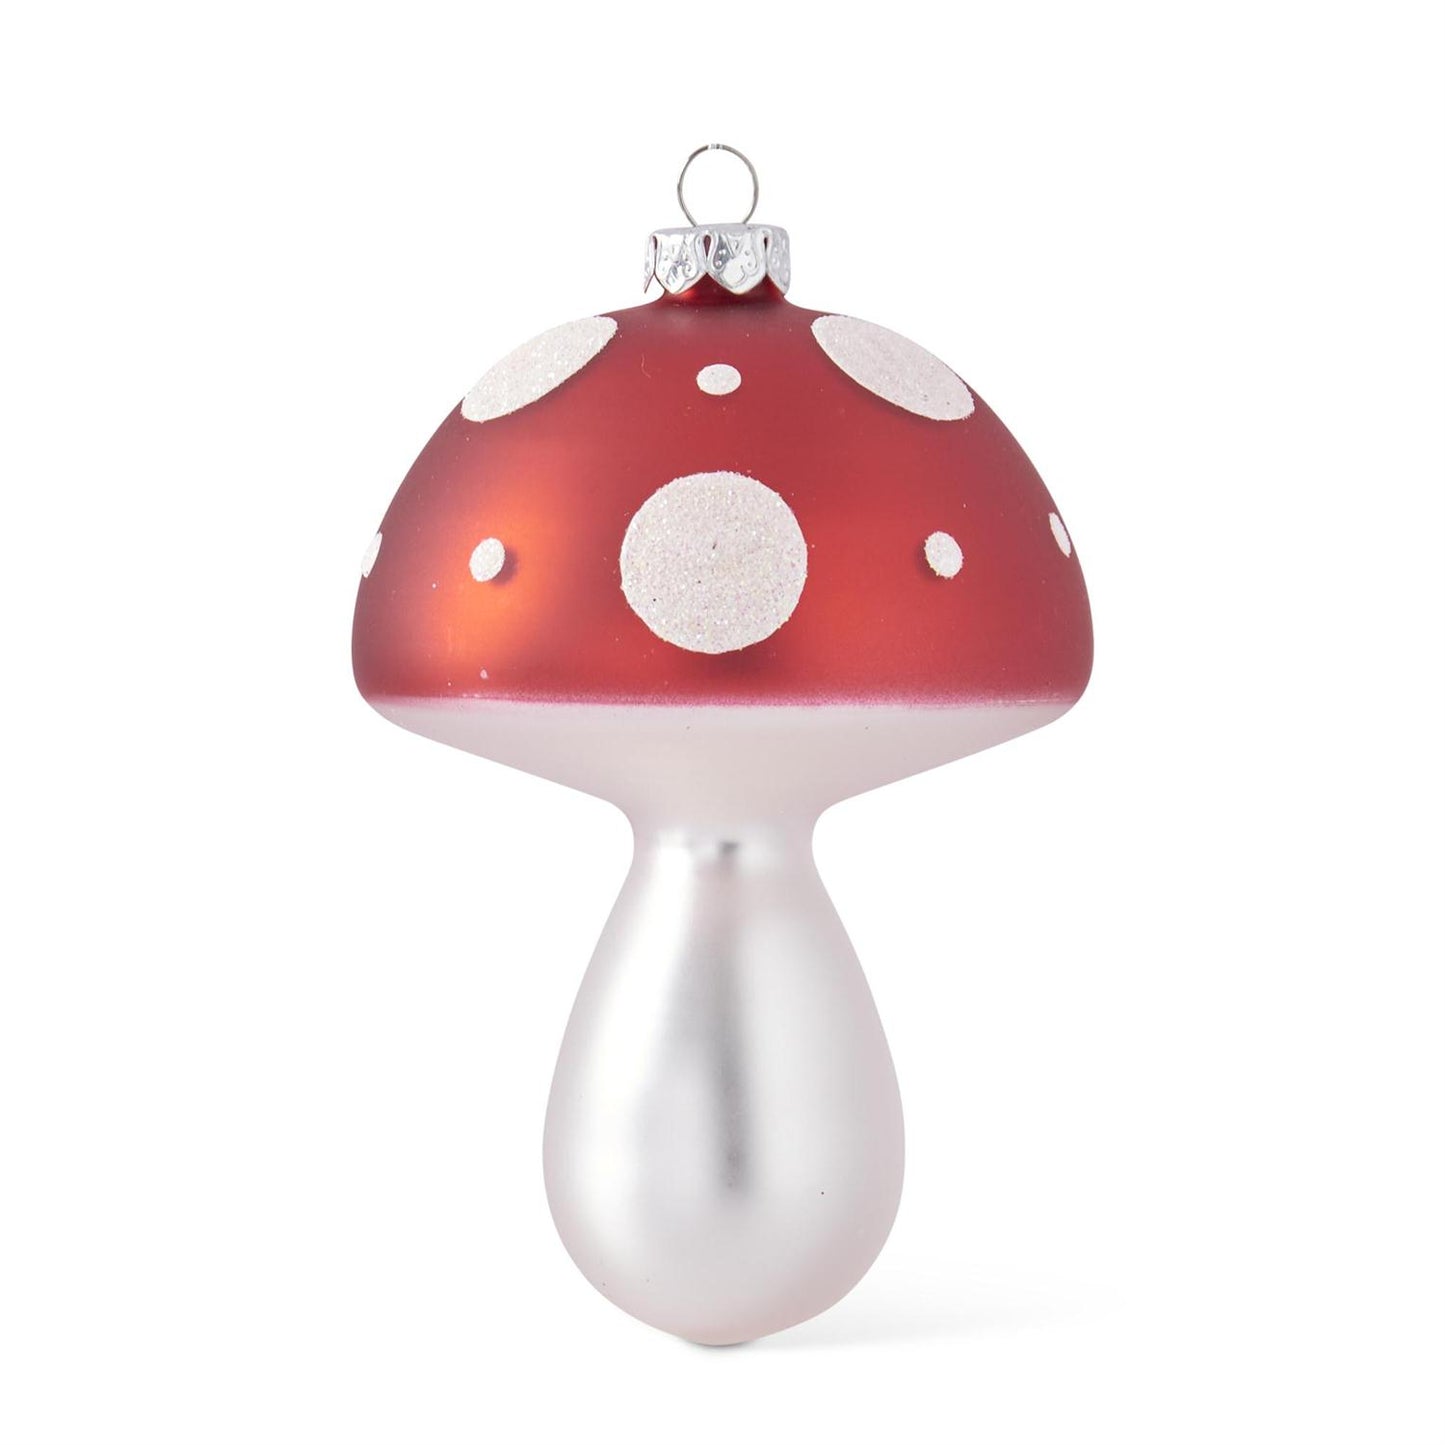 Red & White Polka Dot Mushroom Glass Ornament - 2 Styles, sold separately